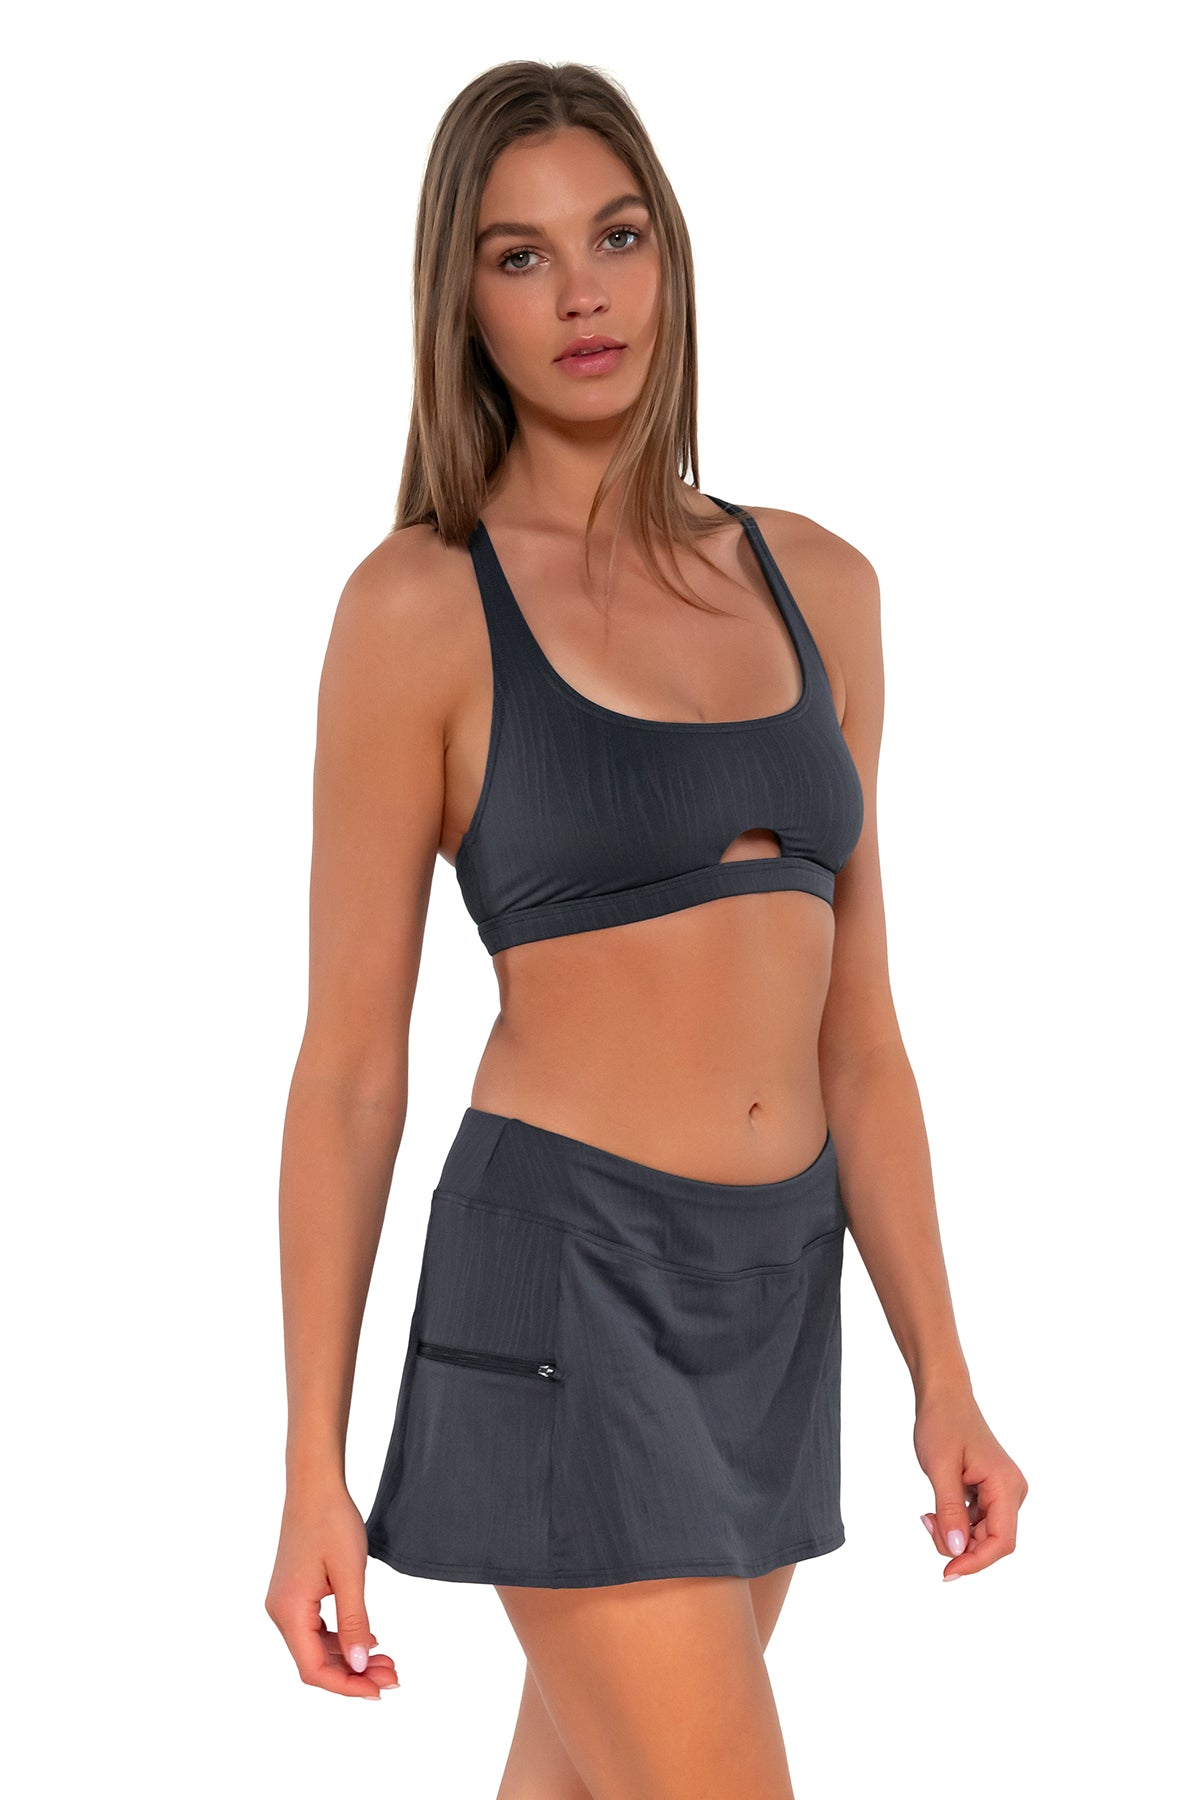 Side pose #1 of Daria wearing Sunsets Slate Seagrass Texture Sporty Swim Skirt with matching Brandi Bralette bikini top